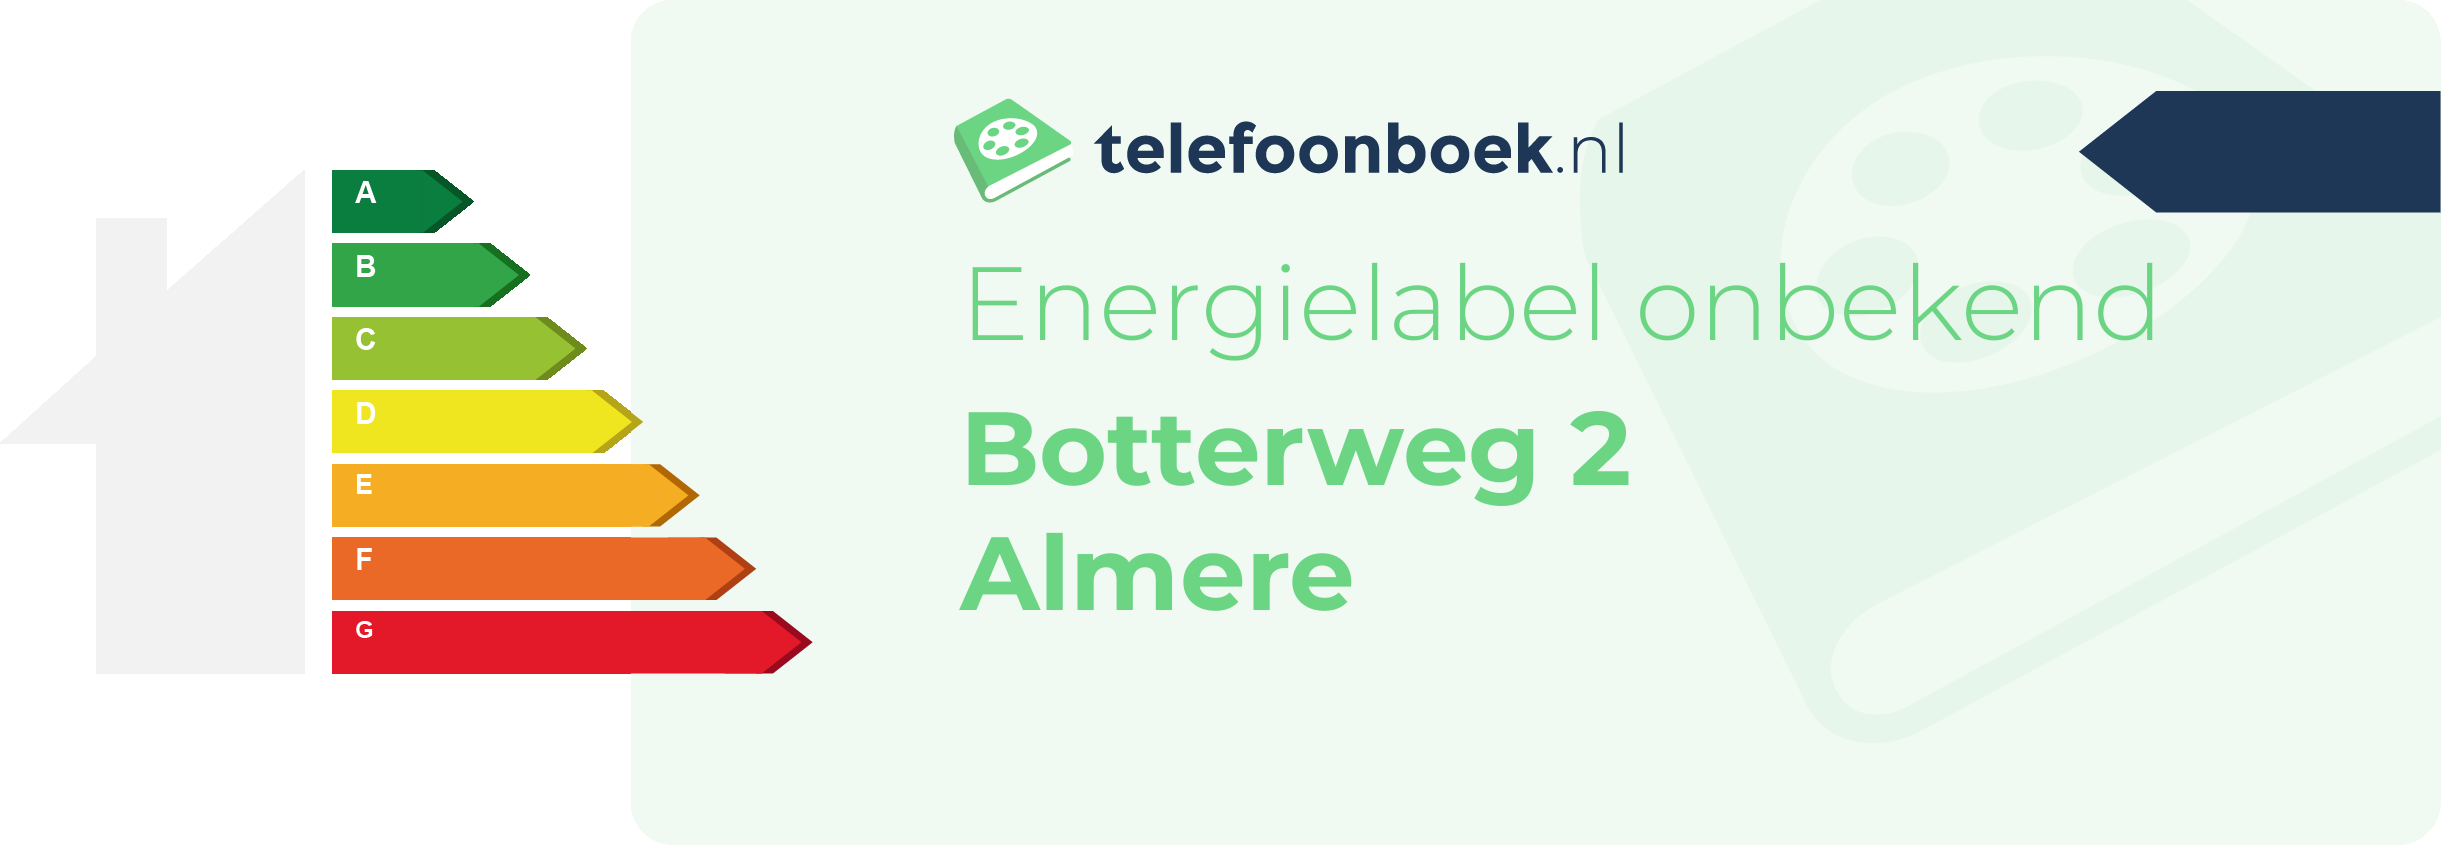 Energielabel Botterweg 2 Almere